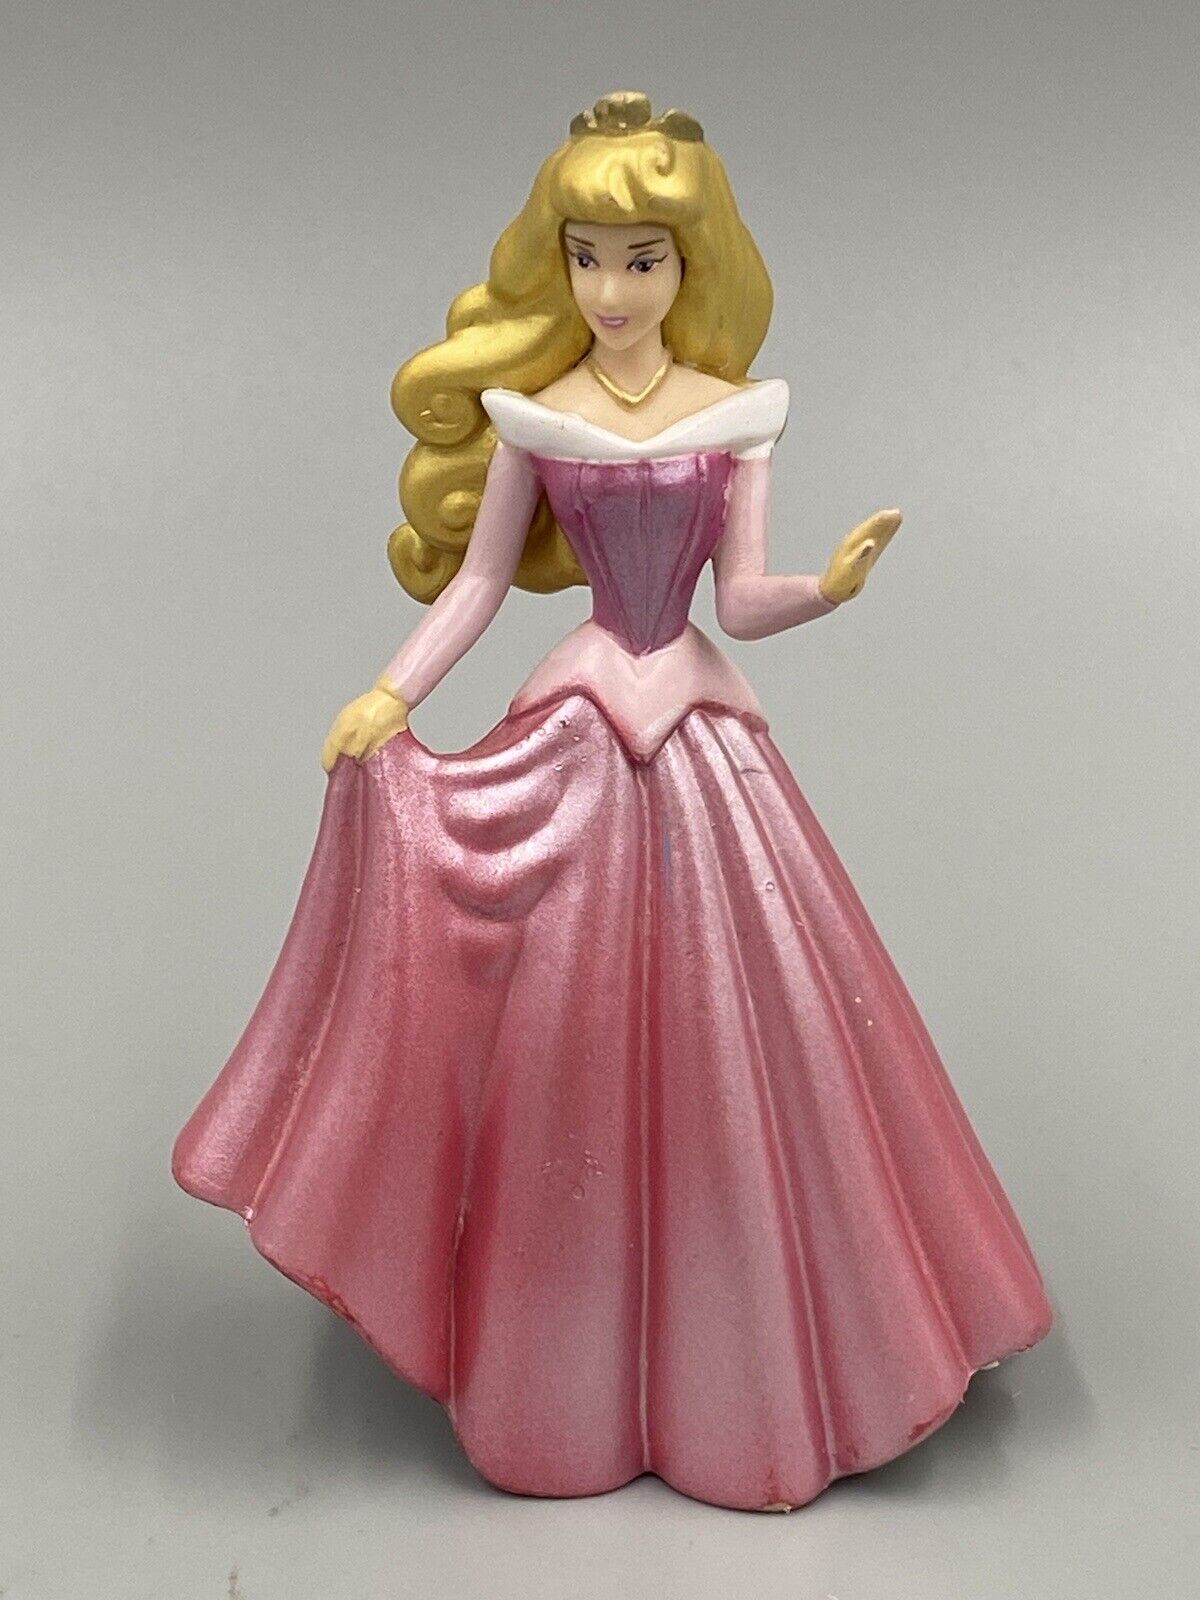 Disney Princess Aurora Sleeping Beauty Cake Topper Toy Figure 3.5”